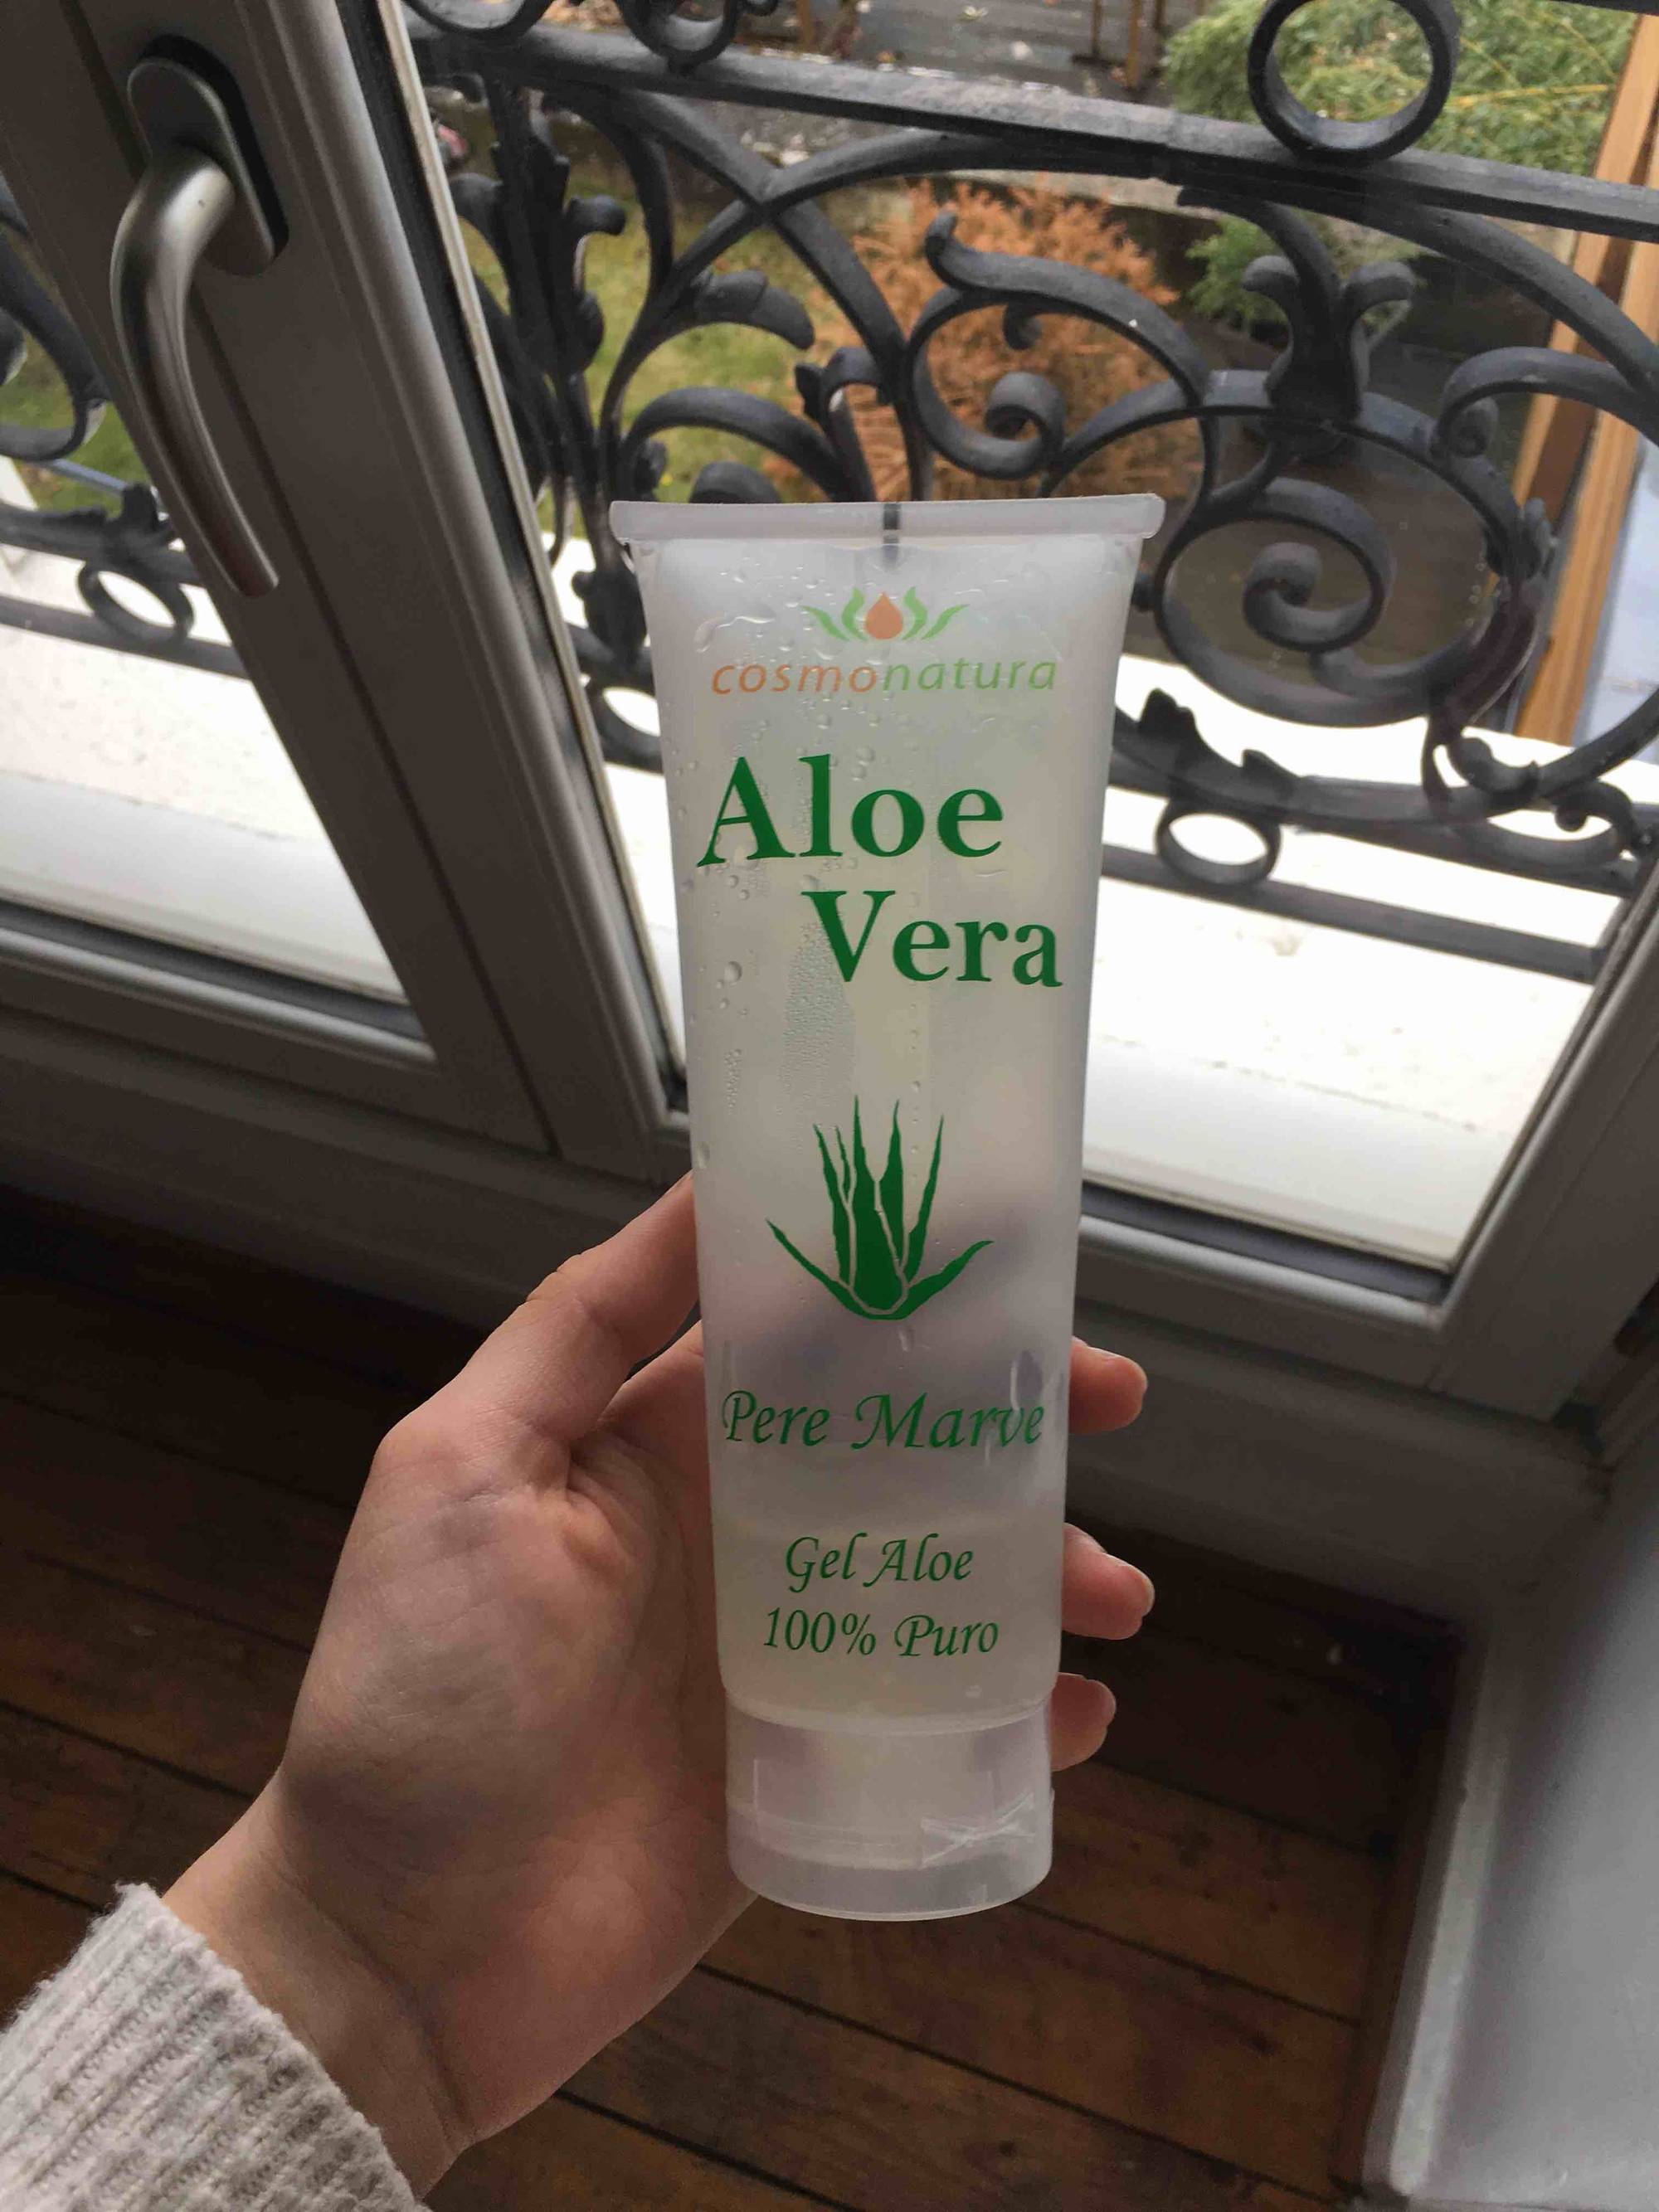 COSMONATURA - Aloe vera - Pere Marve - Gel aloe 100%